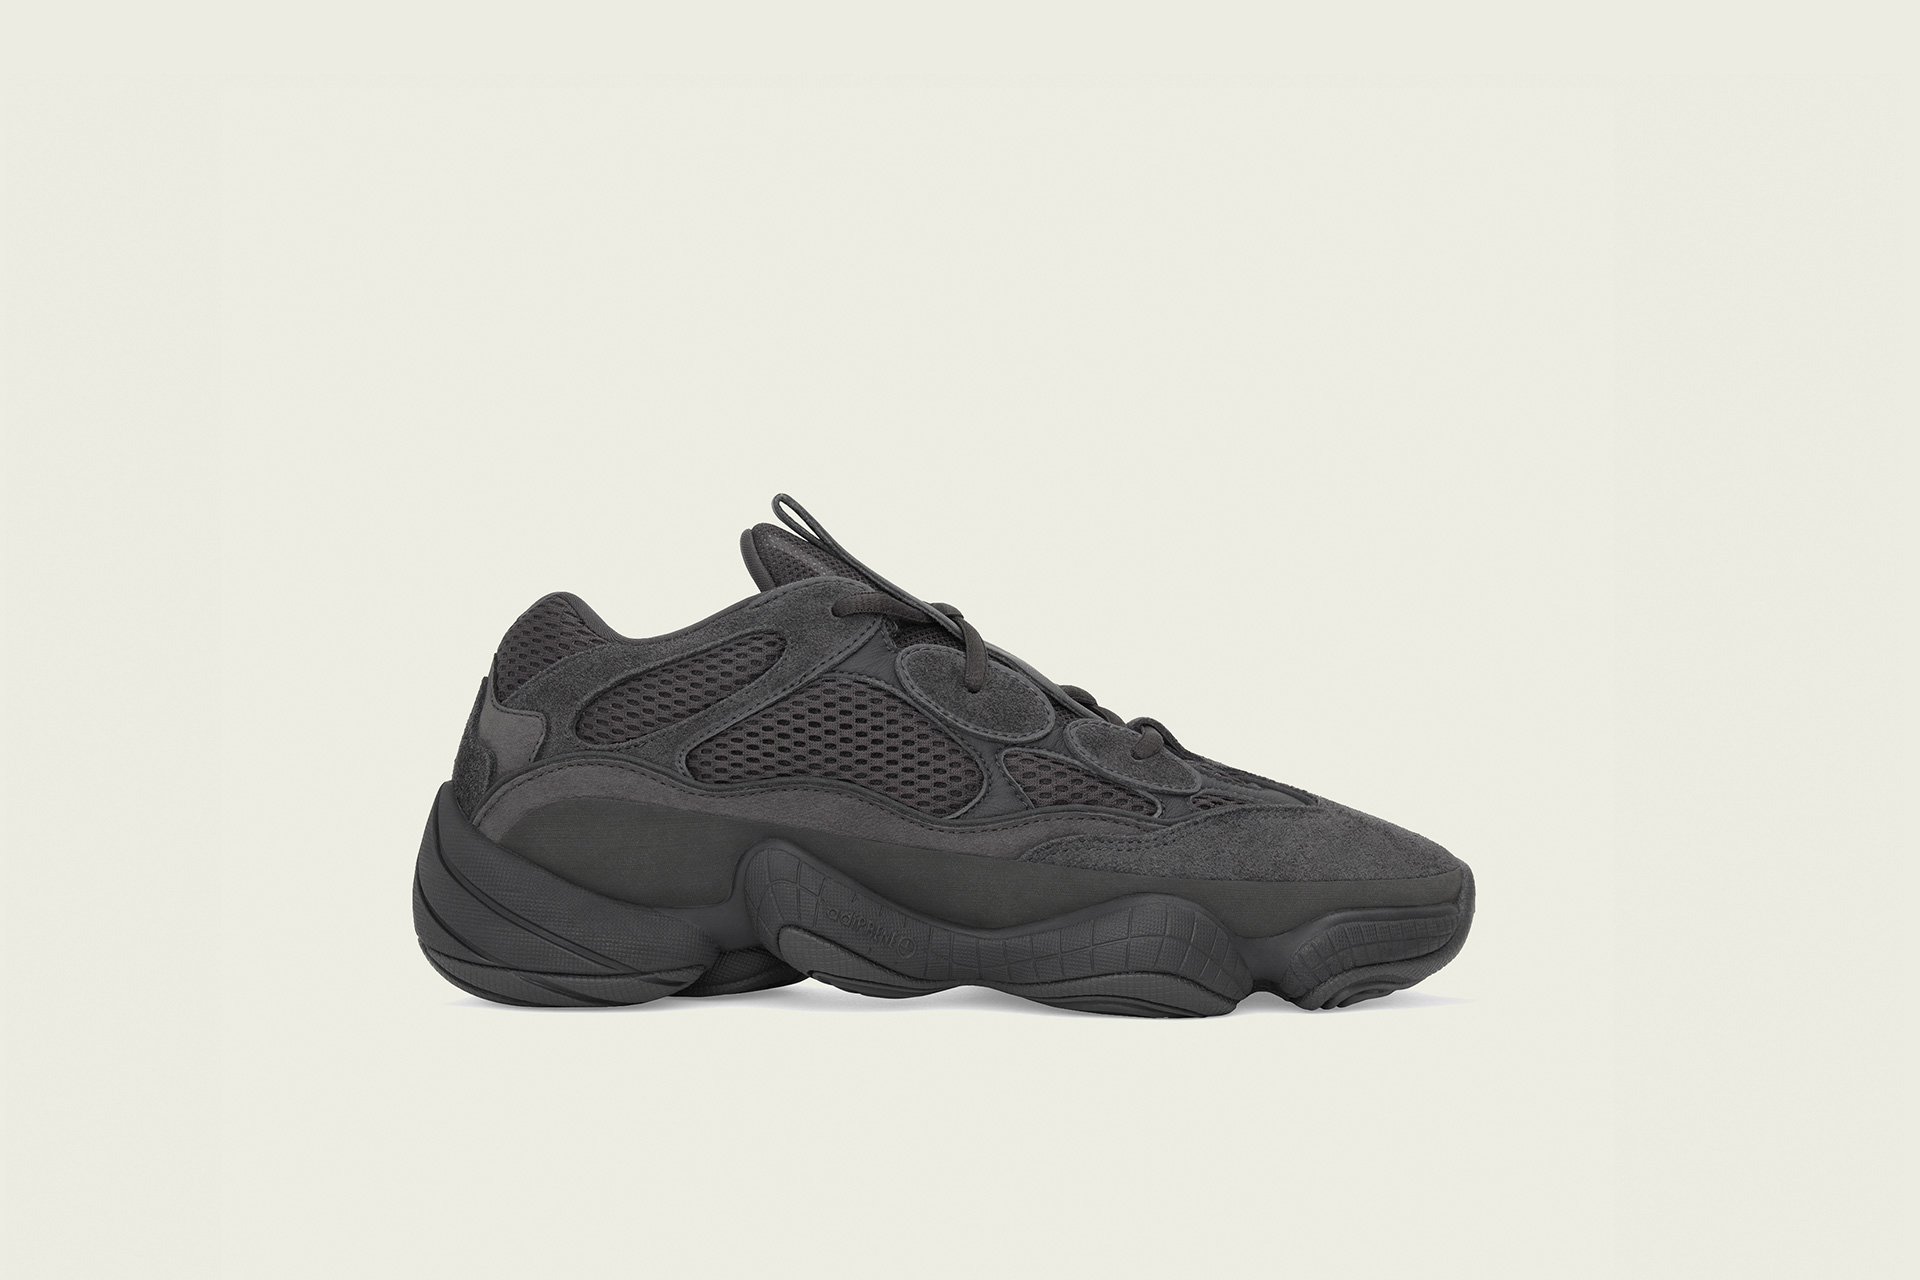 adidas Yeezy 500 - F36640 - Utility Black - Footshop - Releases